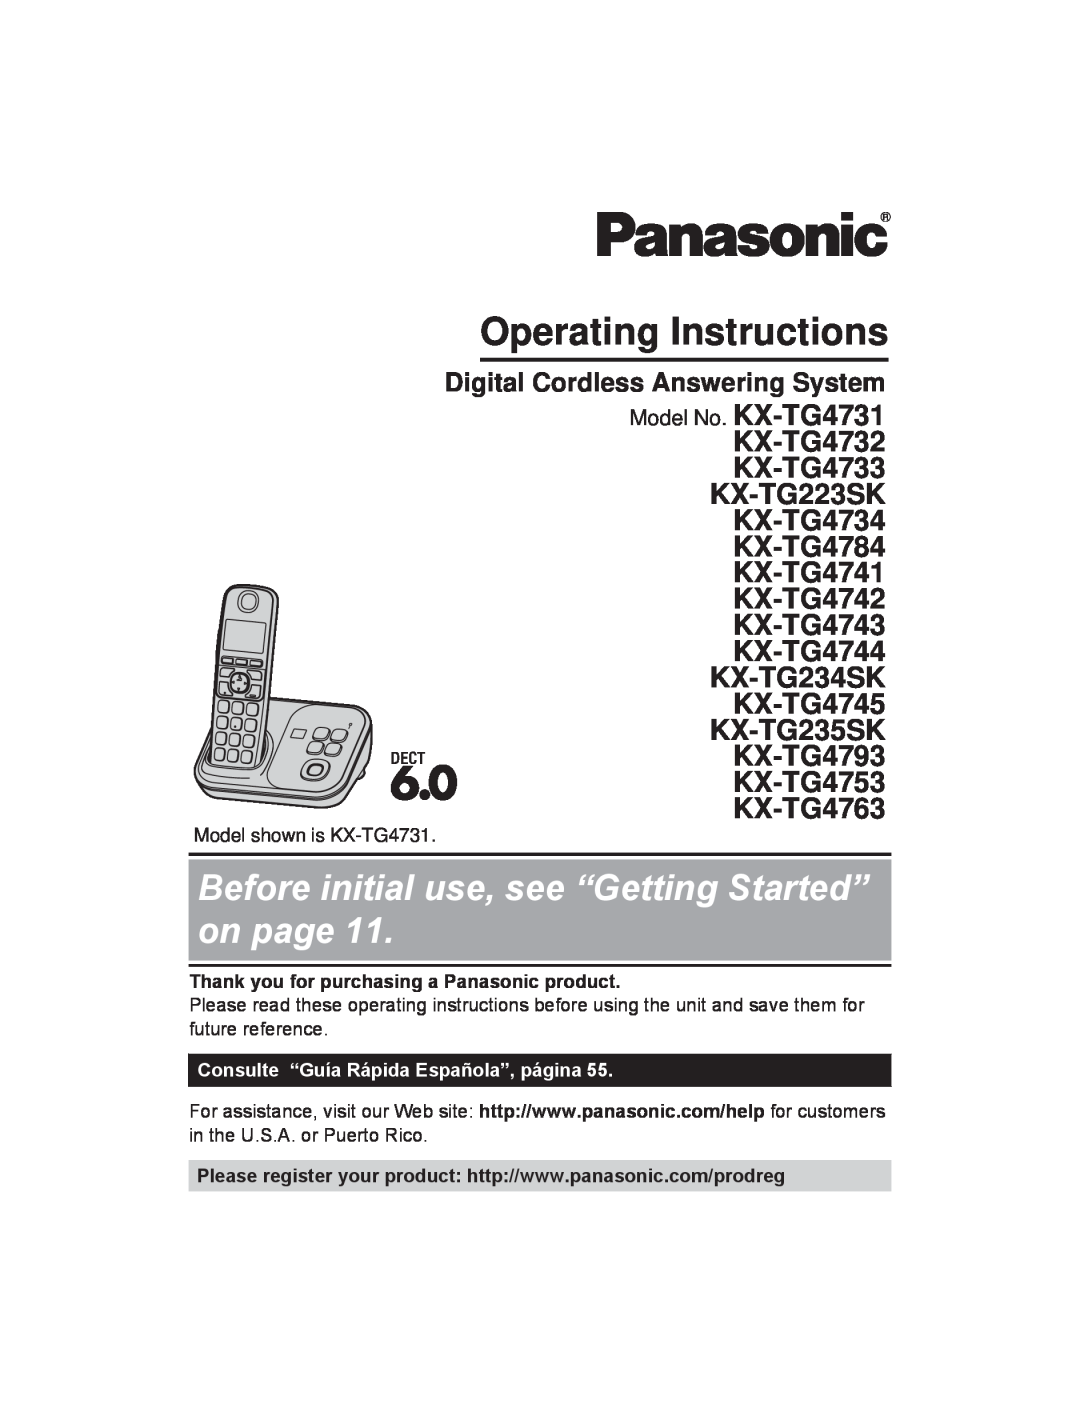 Panasonic KX-TG4745B, KX-TG223SK operating instructions Digital Cordless Answering System, Model shown is KX-TG4731 